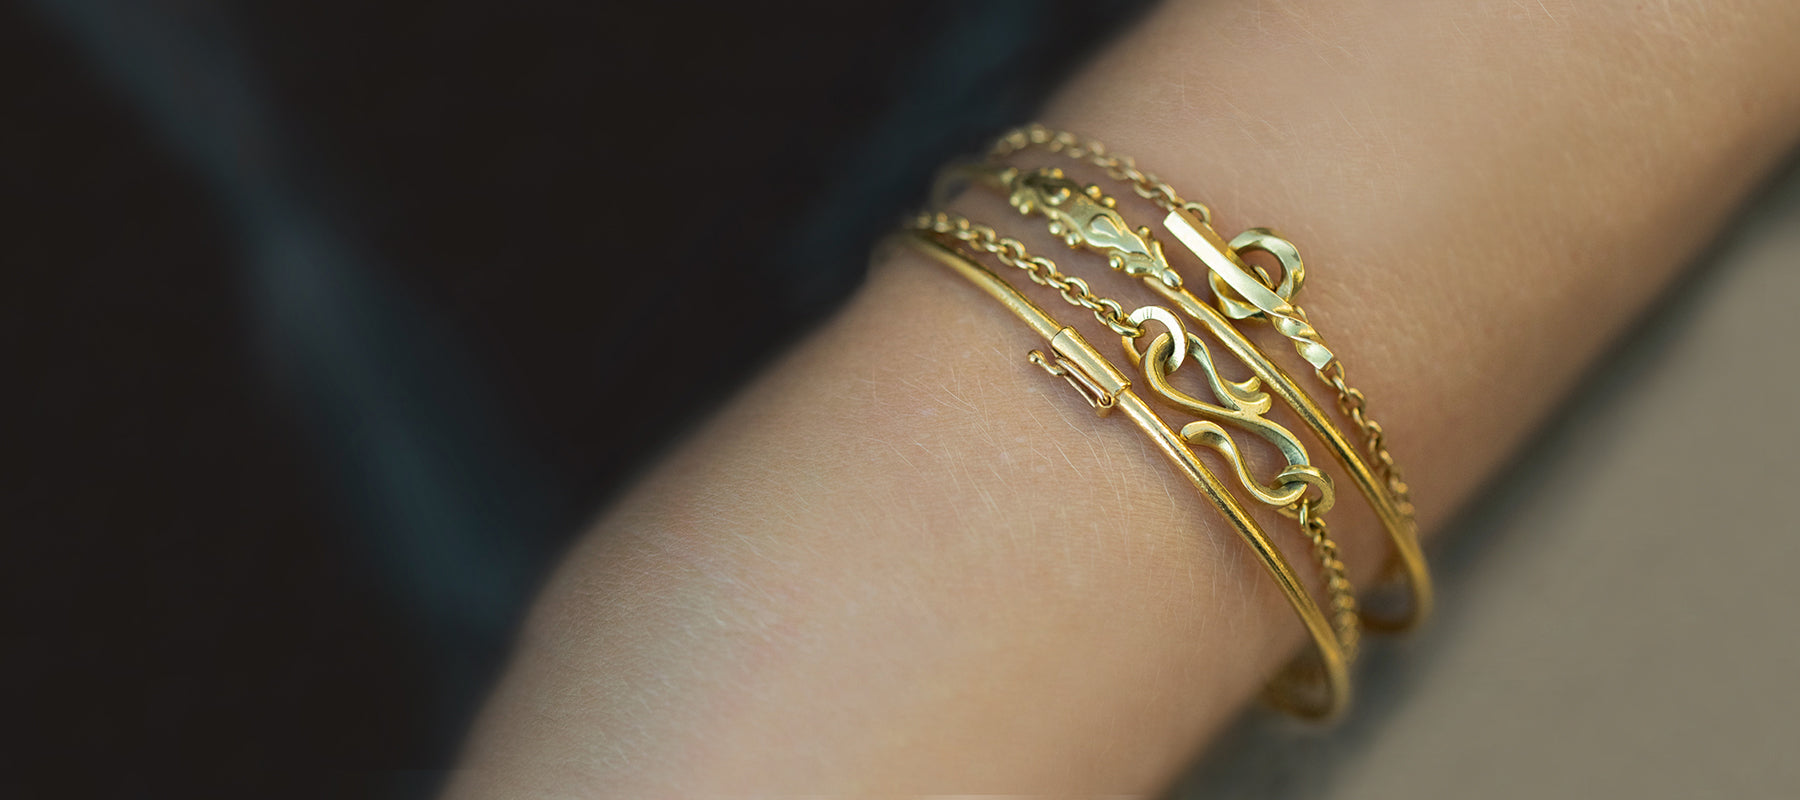 Bracelets, Bracelets for women, Anat gelbard, jewelry, designed jewelry, handcrafted jewelry, gold Bracelets, gold Bracelets with diamond, gold Bracelets for women, 18k gold Bracelets, 22k gold Bracelets, gemstone Bracelets, gemstone jewelry,